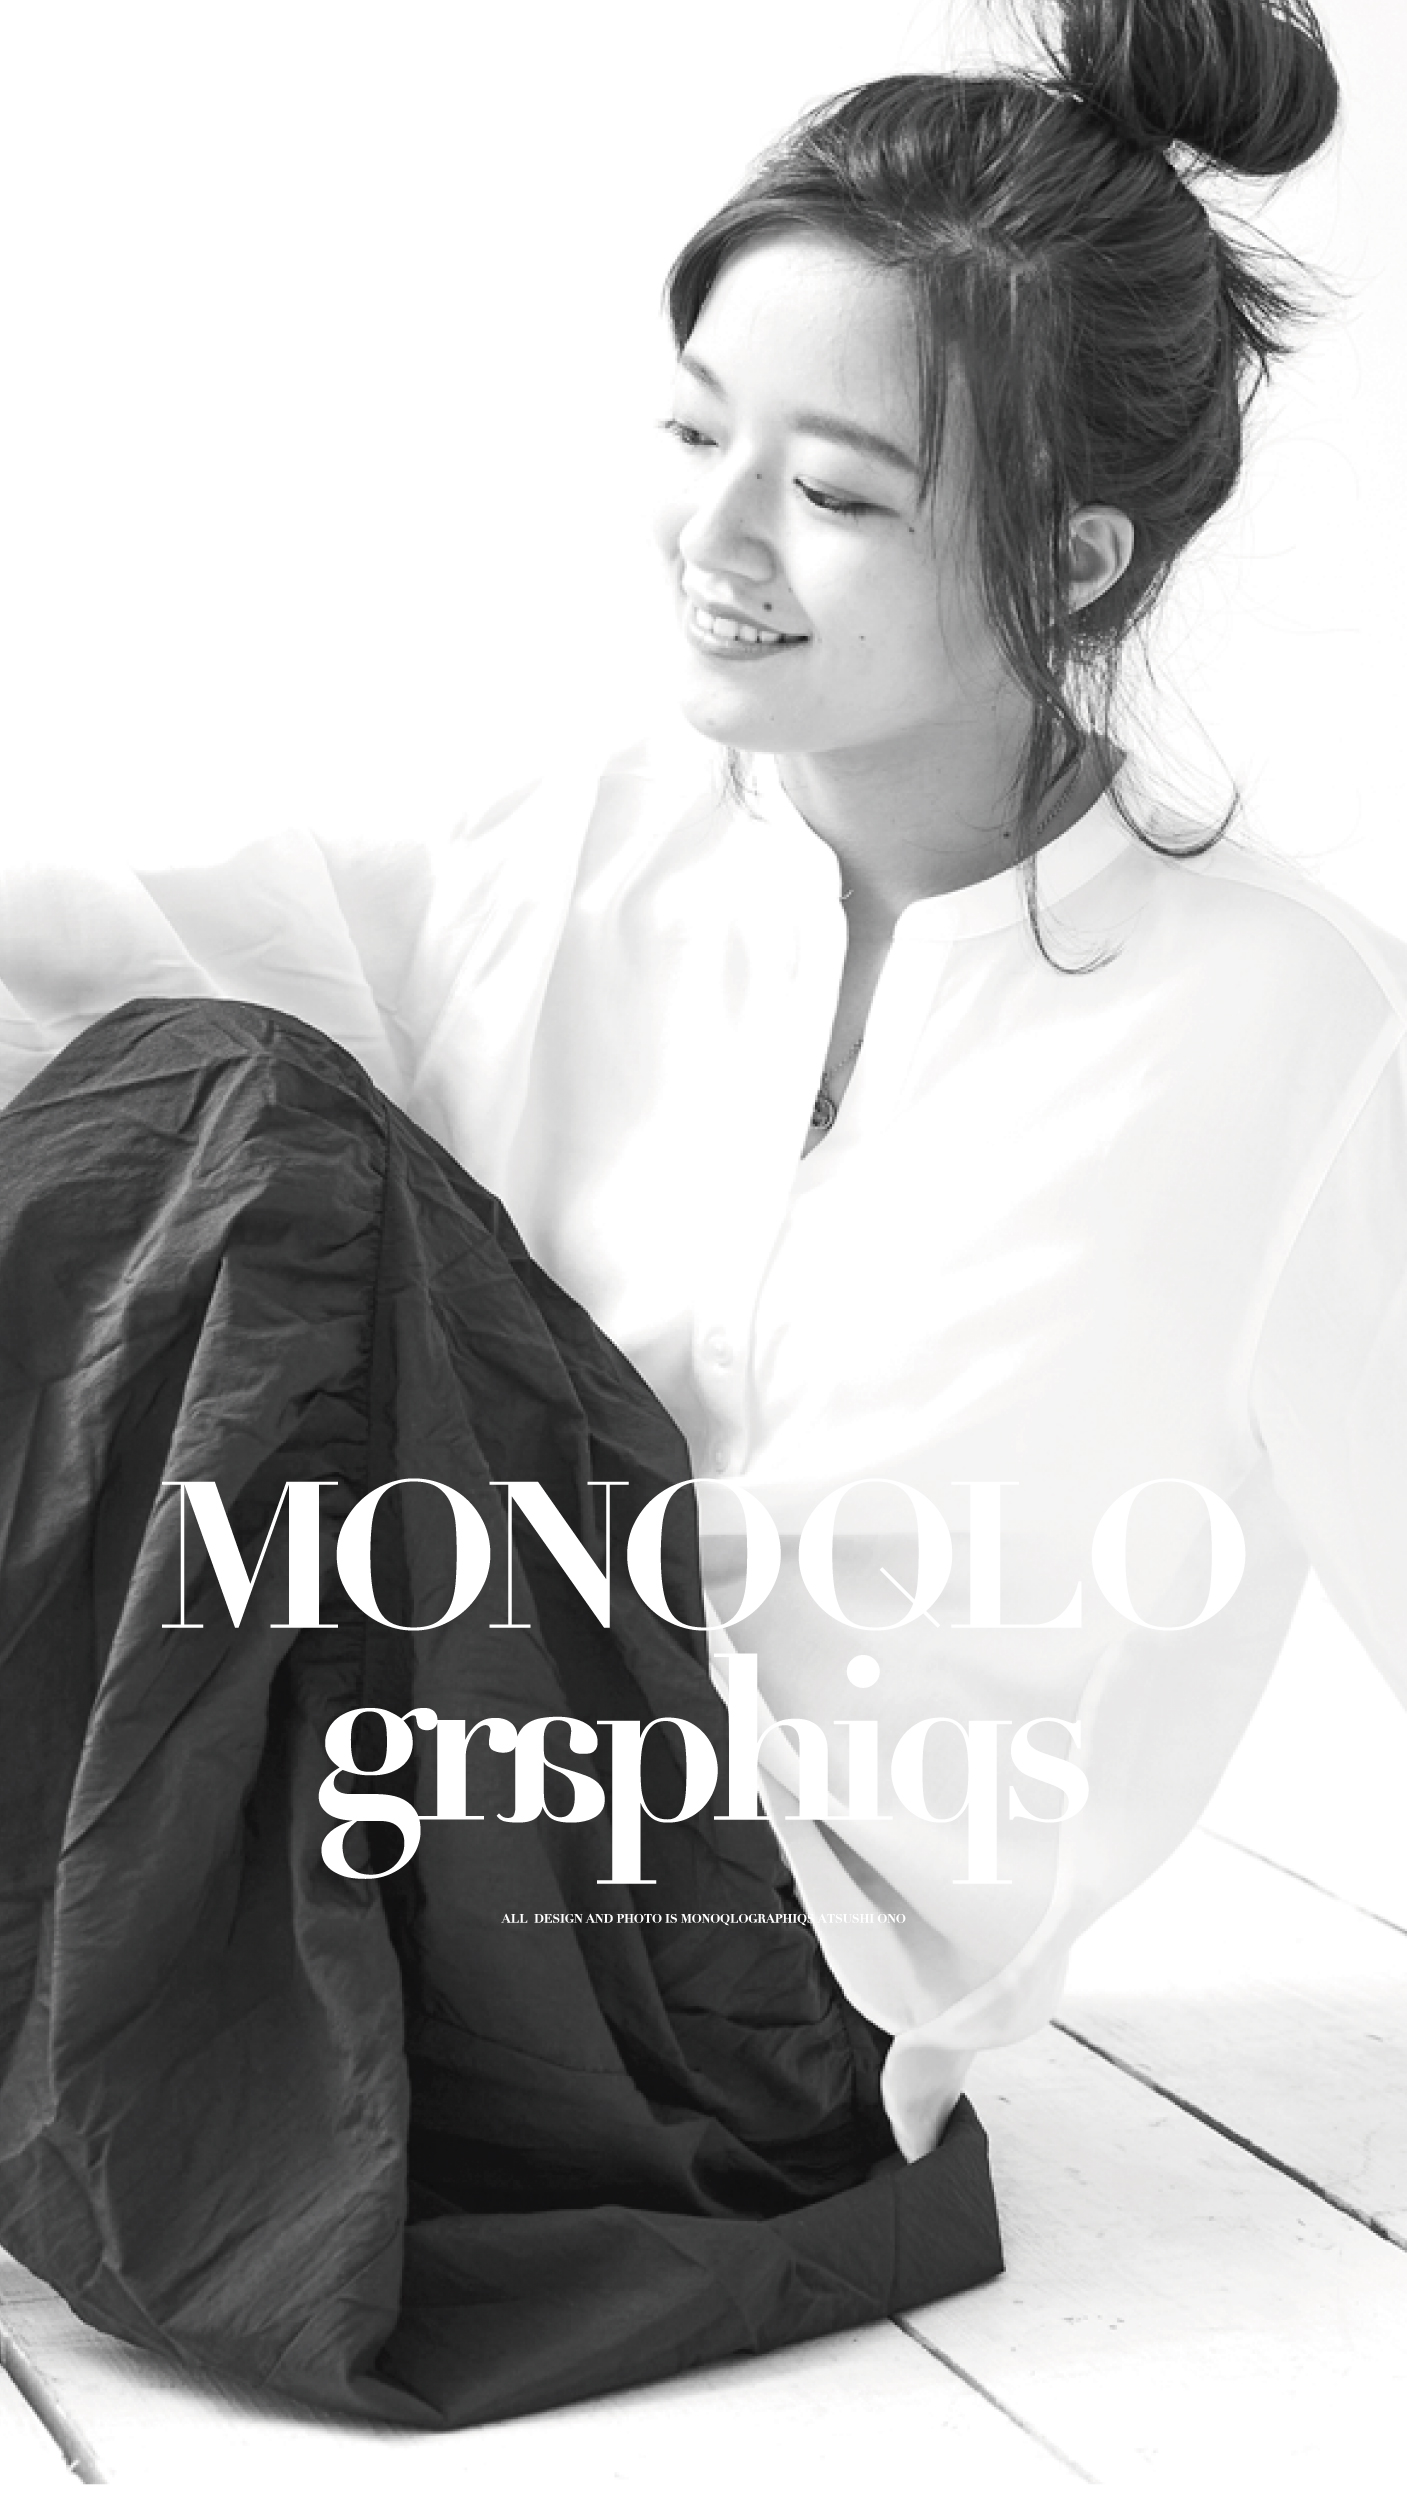 MONOQLO GRAPHIQS - 大阪 | 兵庫 | グラフィックデザイン | 写真撮影